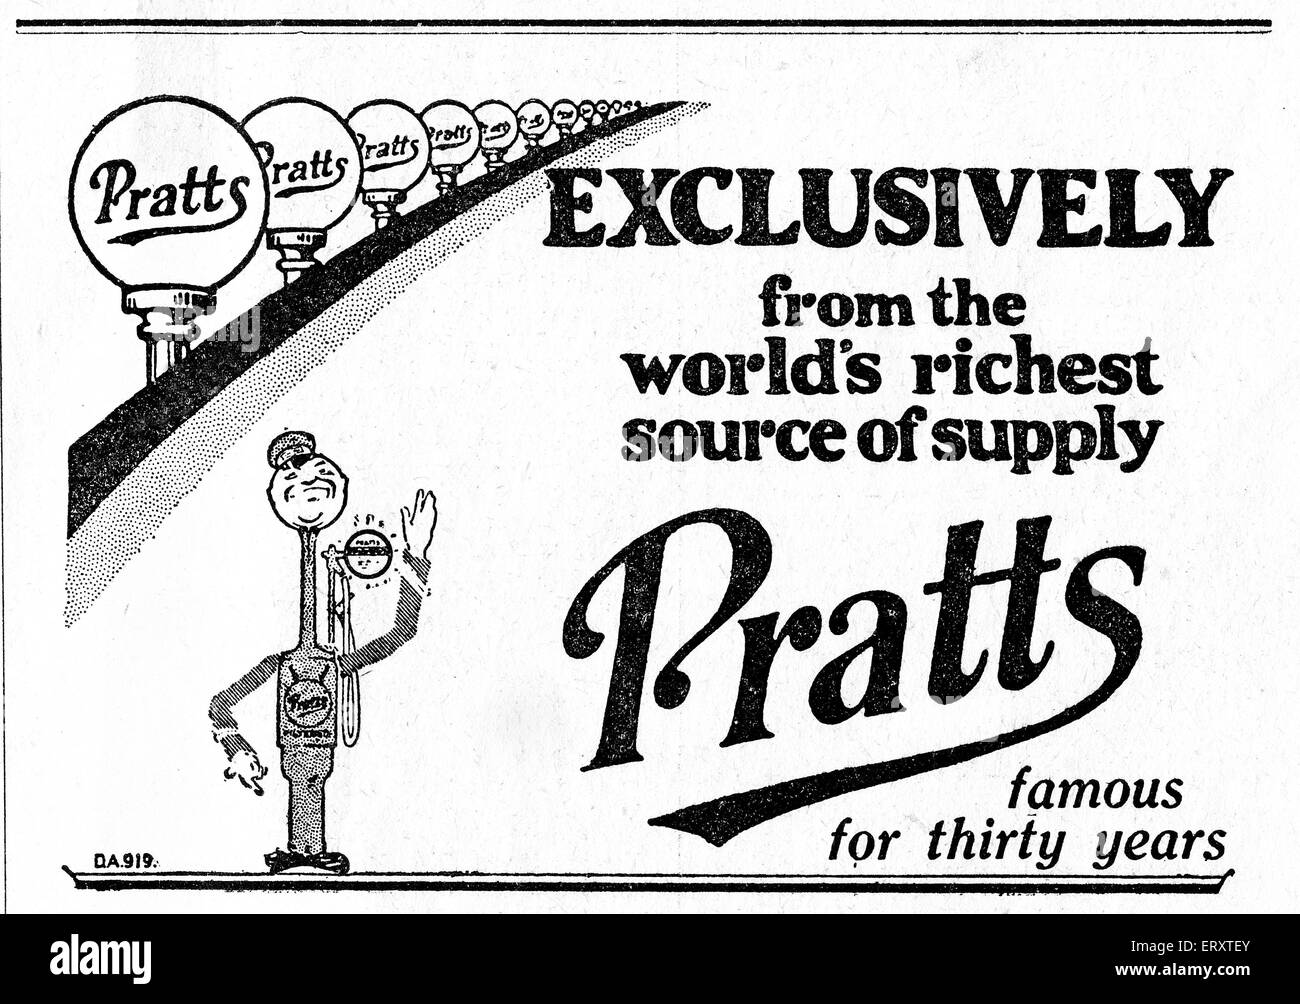 1927 newspaper advertisement for Pratts petrol Stock Photo